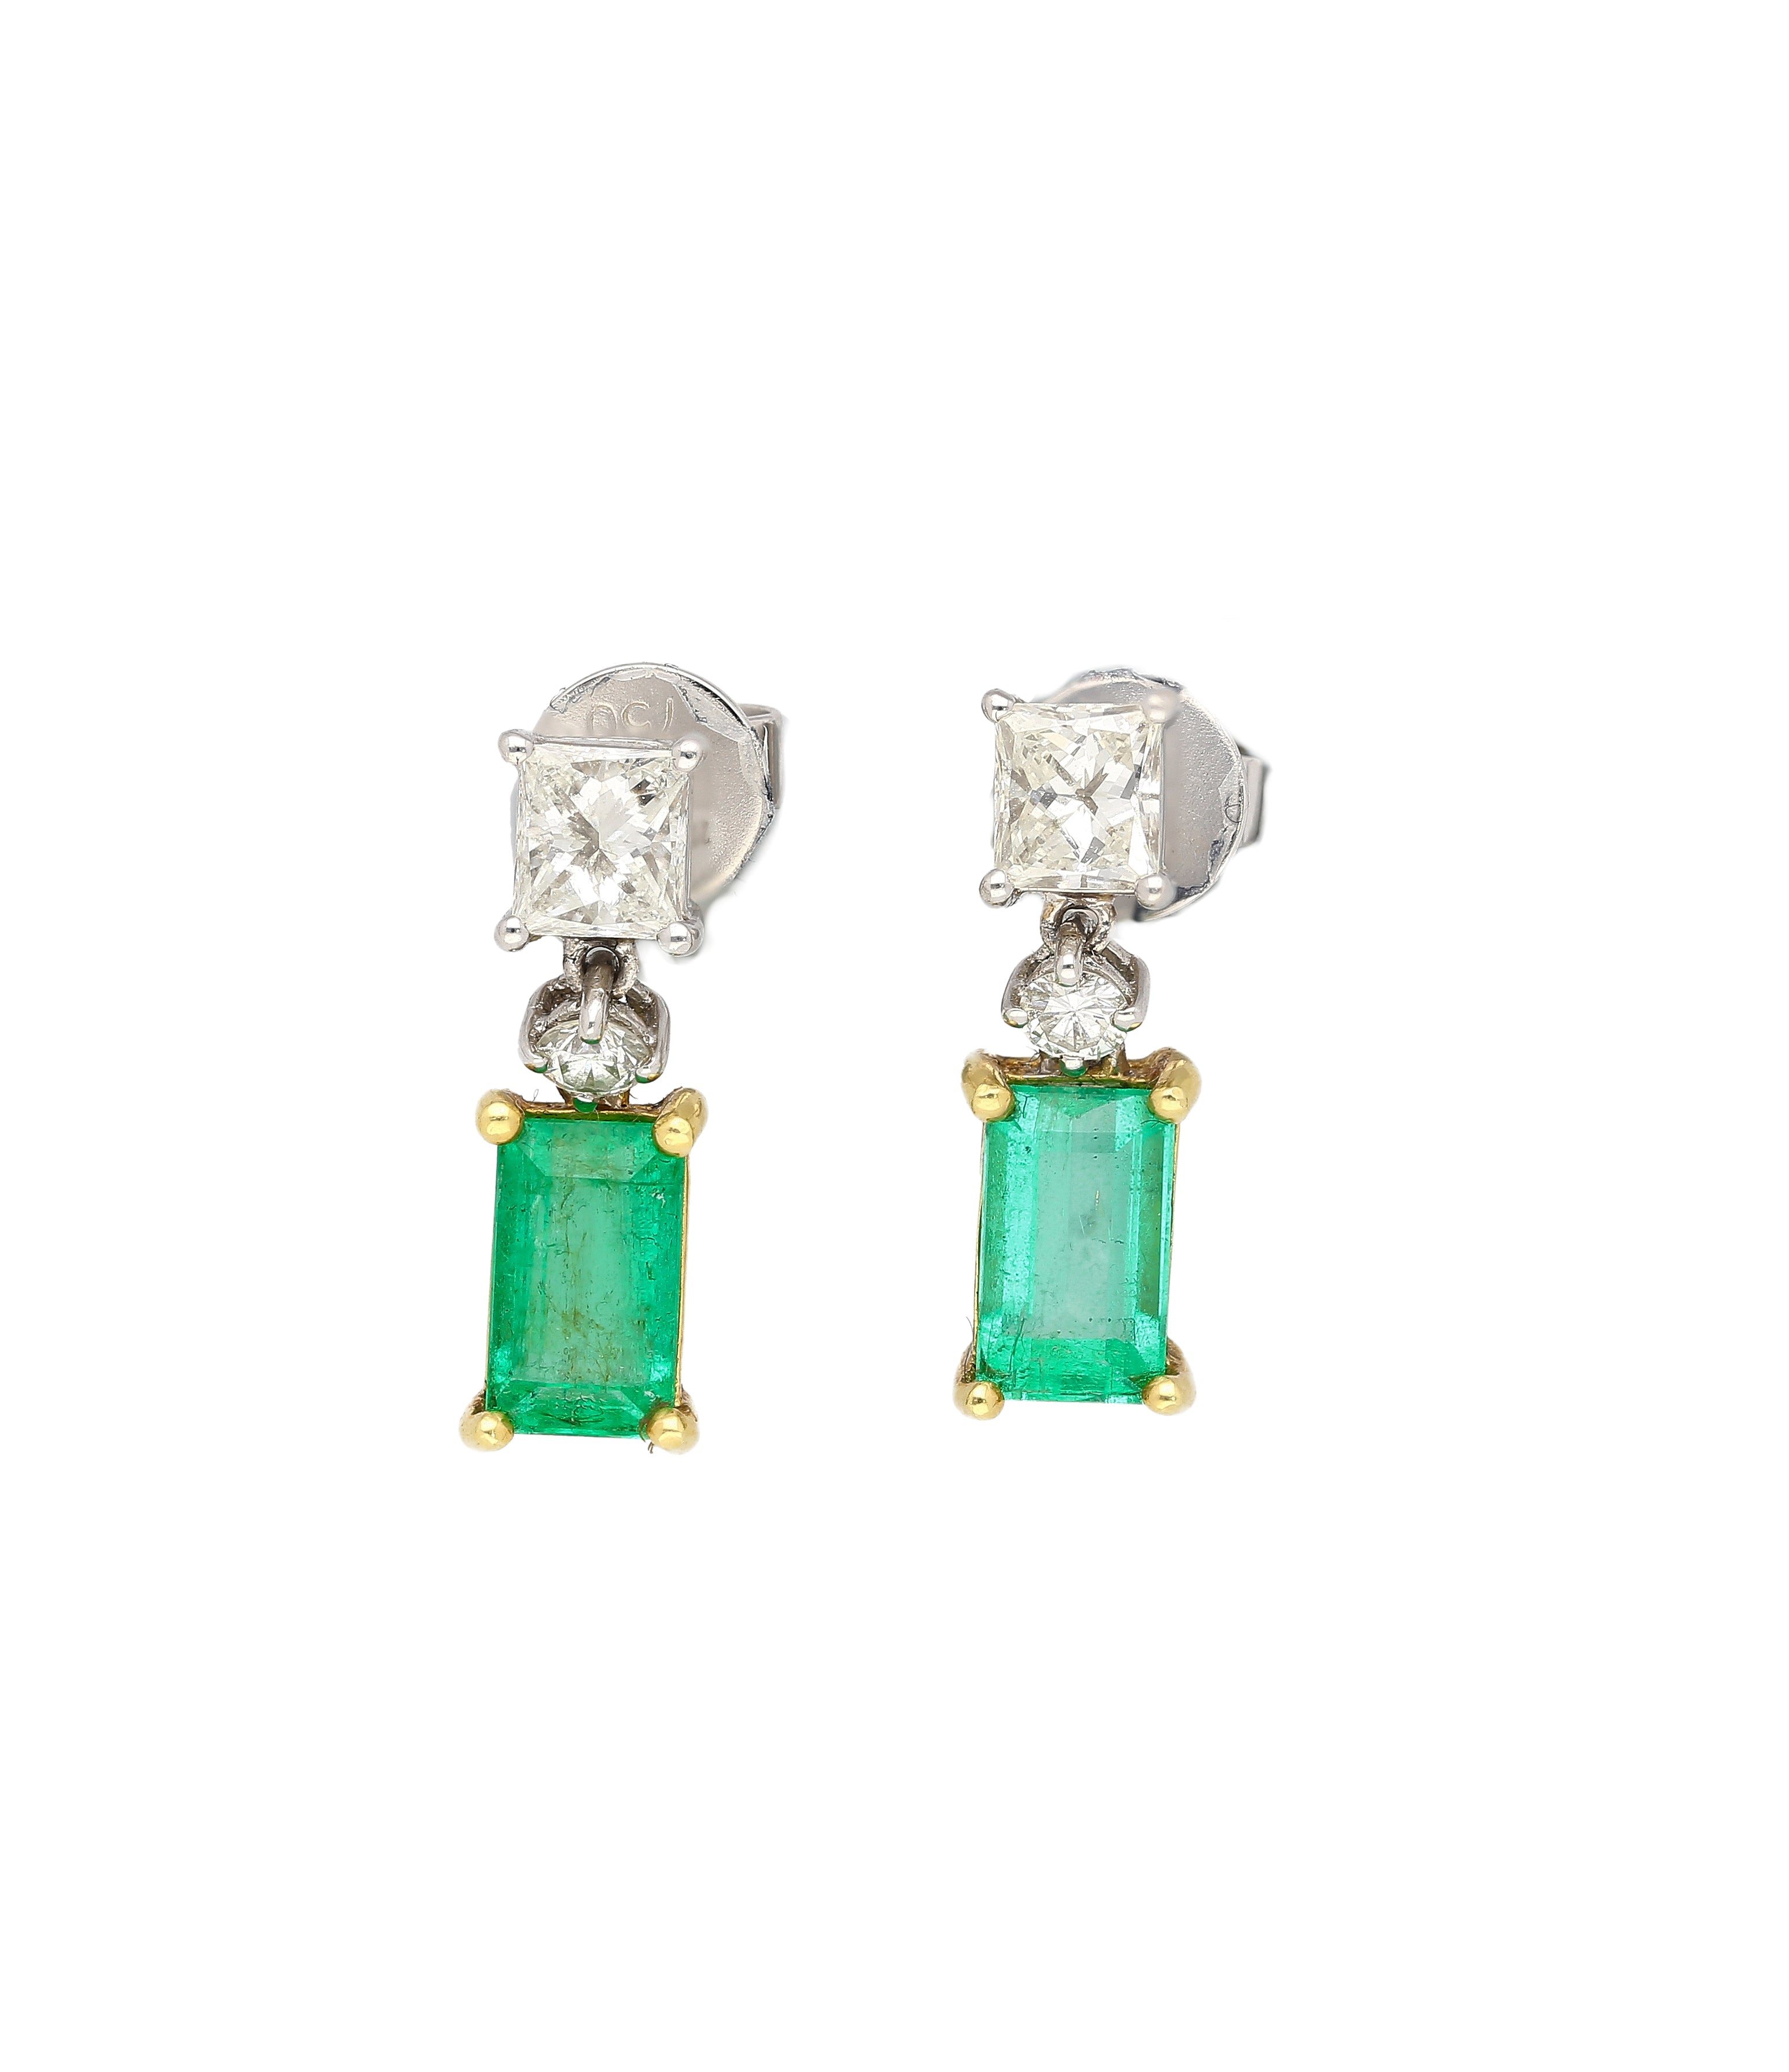 Natural-Elongated-Emerald-and-Diamond-Drop-Earrings-in-18K-Gold-Earrings.jpg